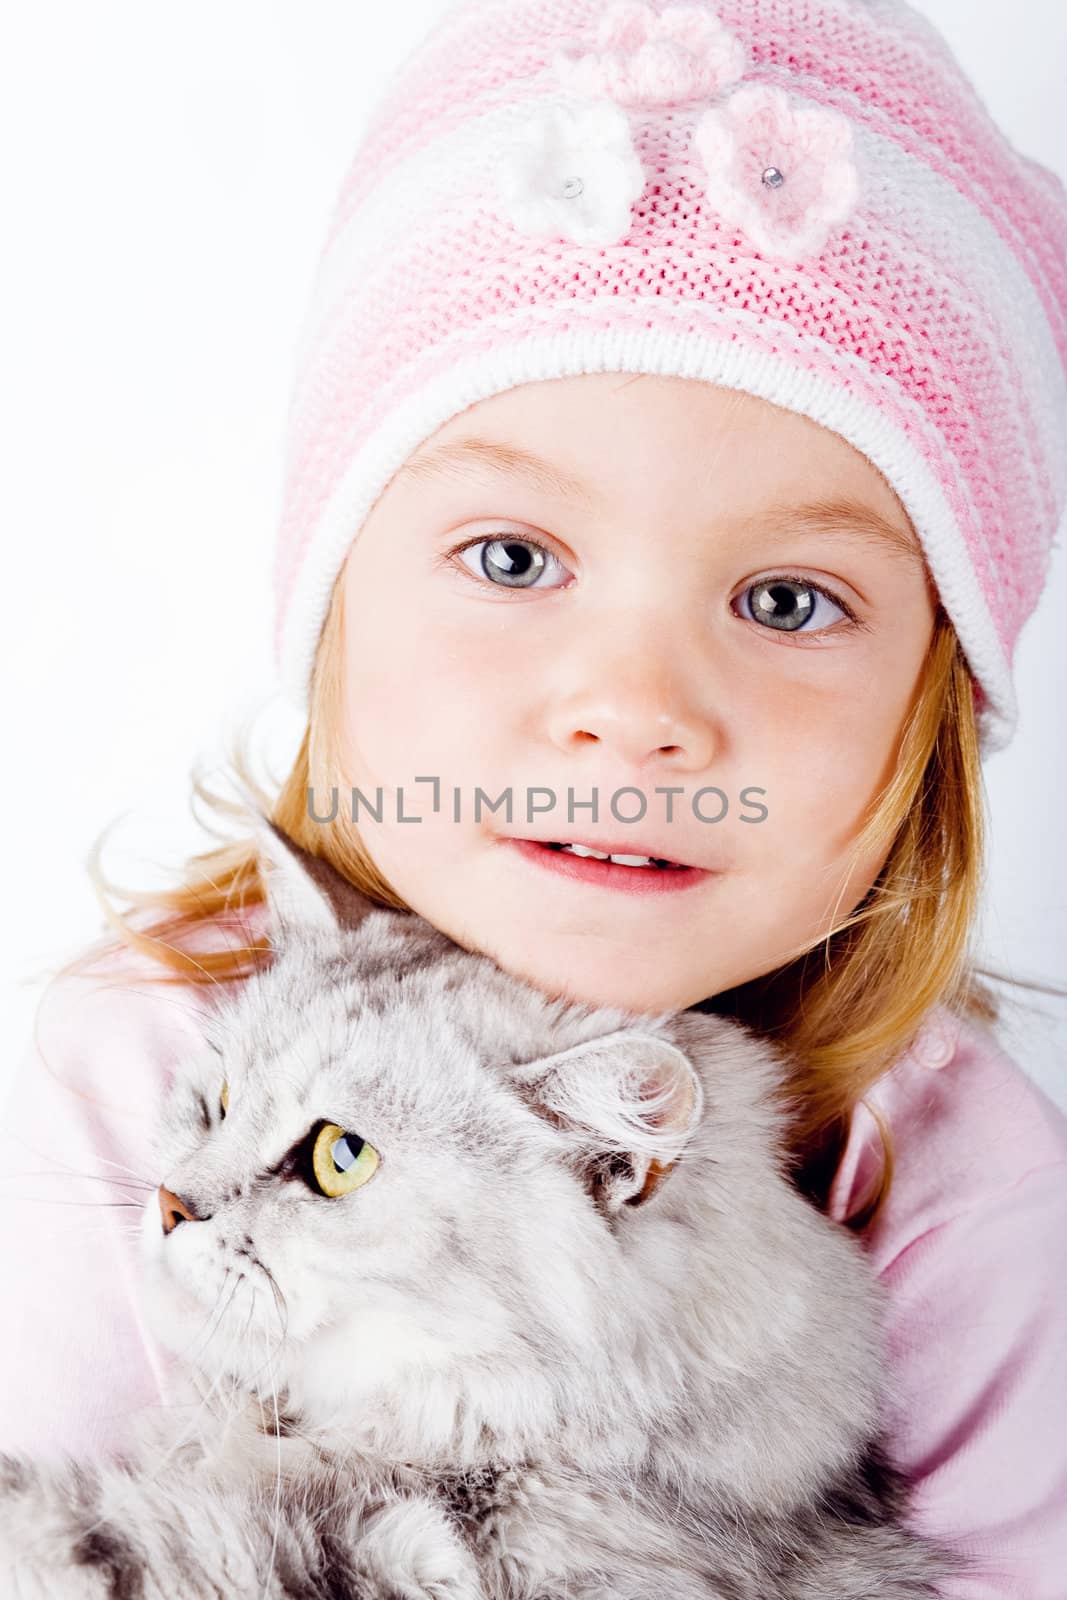 Child and kitten by alenkasm